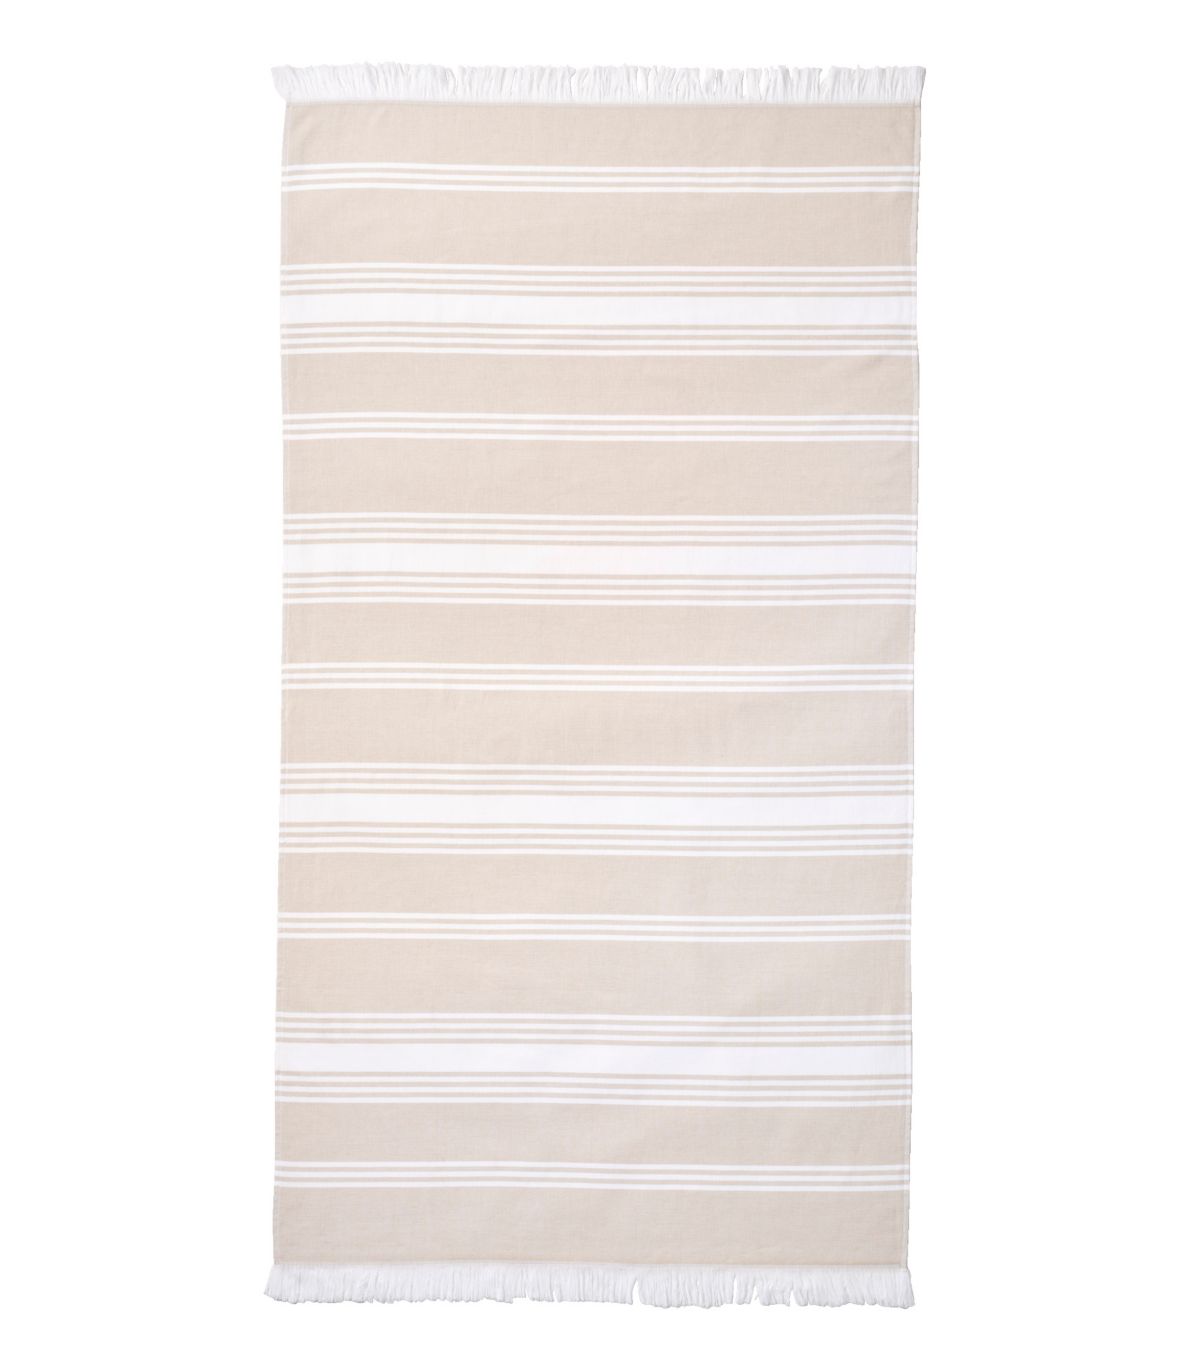 Turkish Beach Towel, Stripe